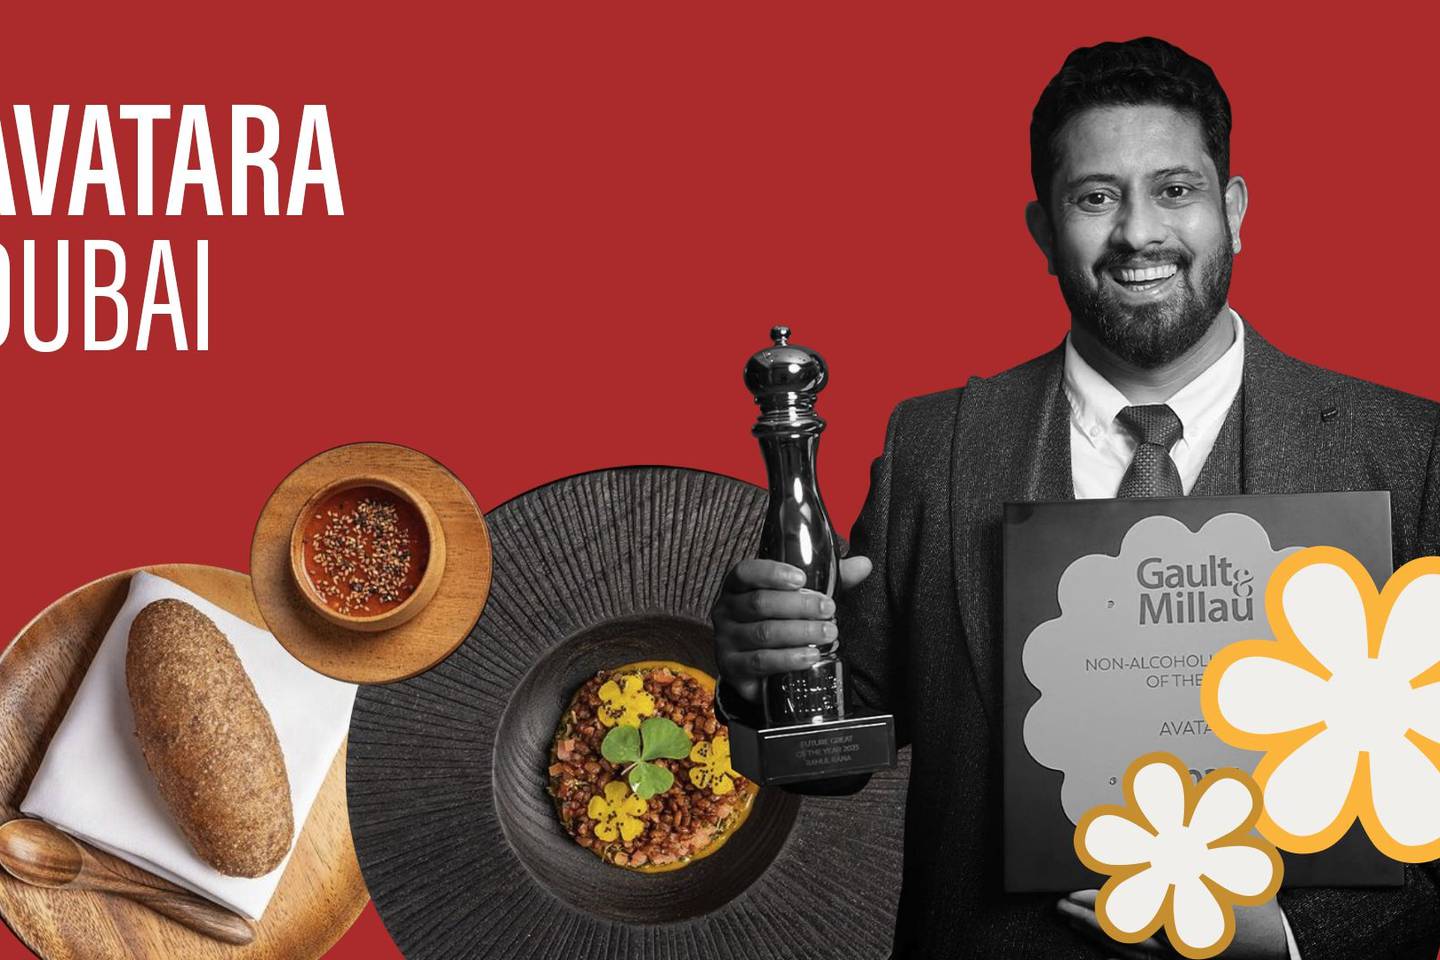 Avatara Dubai: What to expect at Michelin-starred restaurant